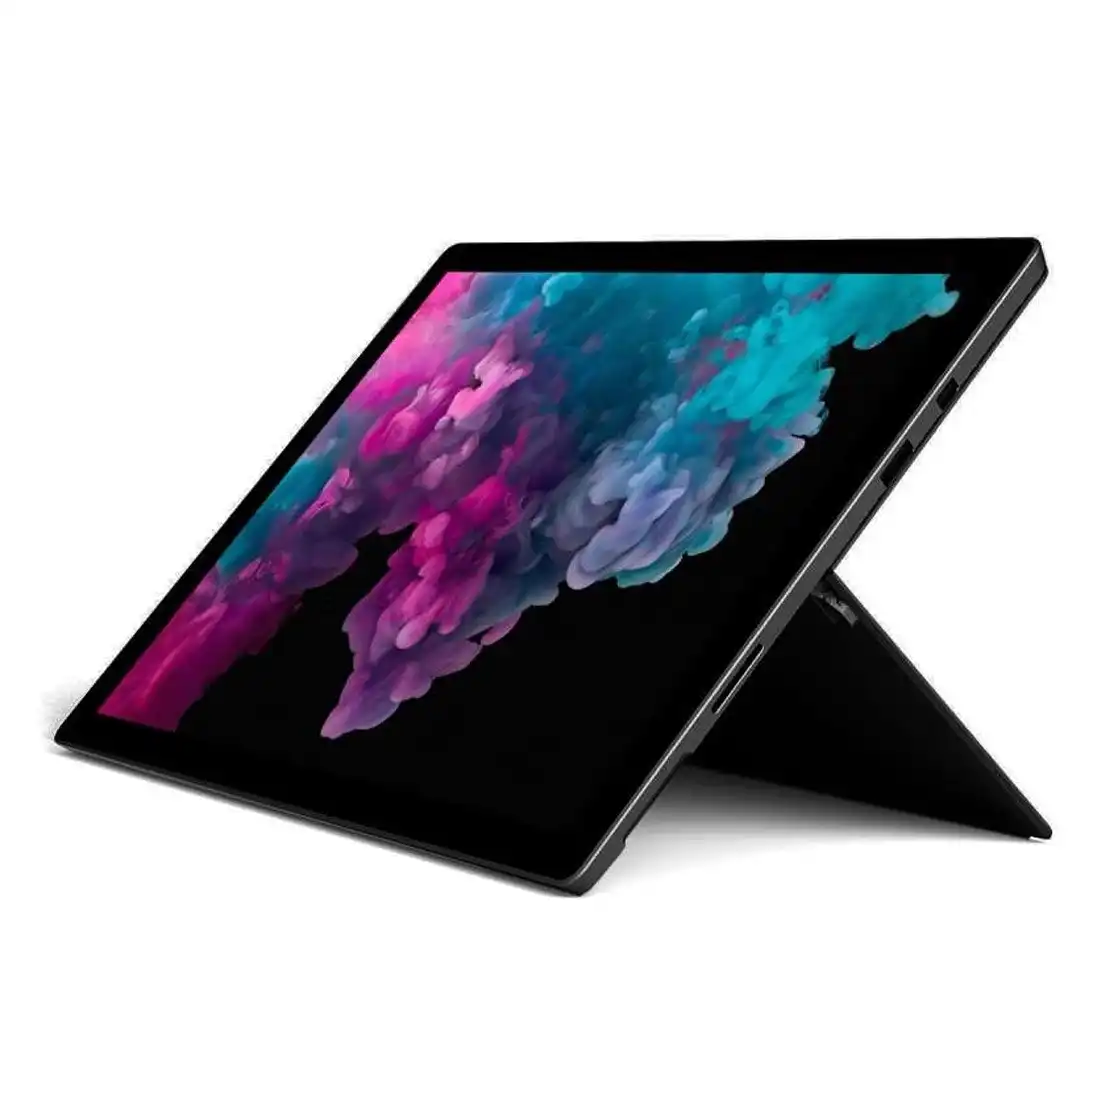 Microsoft Surface Pro (6th Gen) 12.3", i5-8250U, 256GB/8GB Black [Refurbished] - Excellent